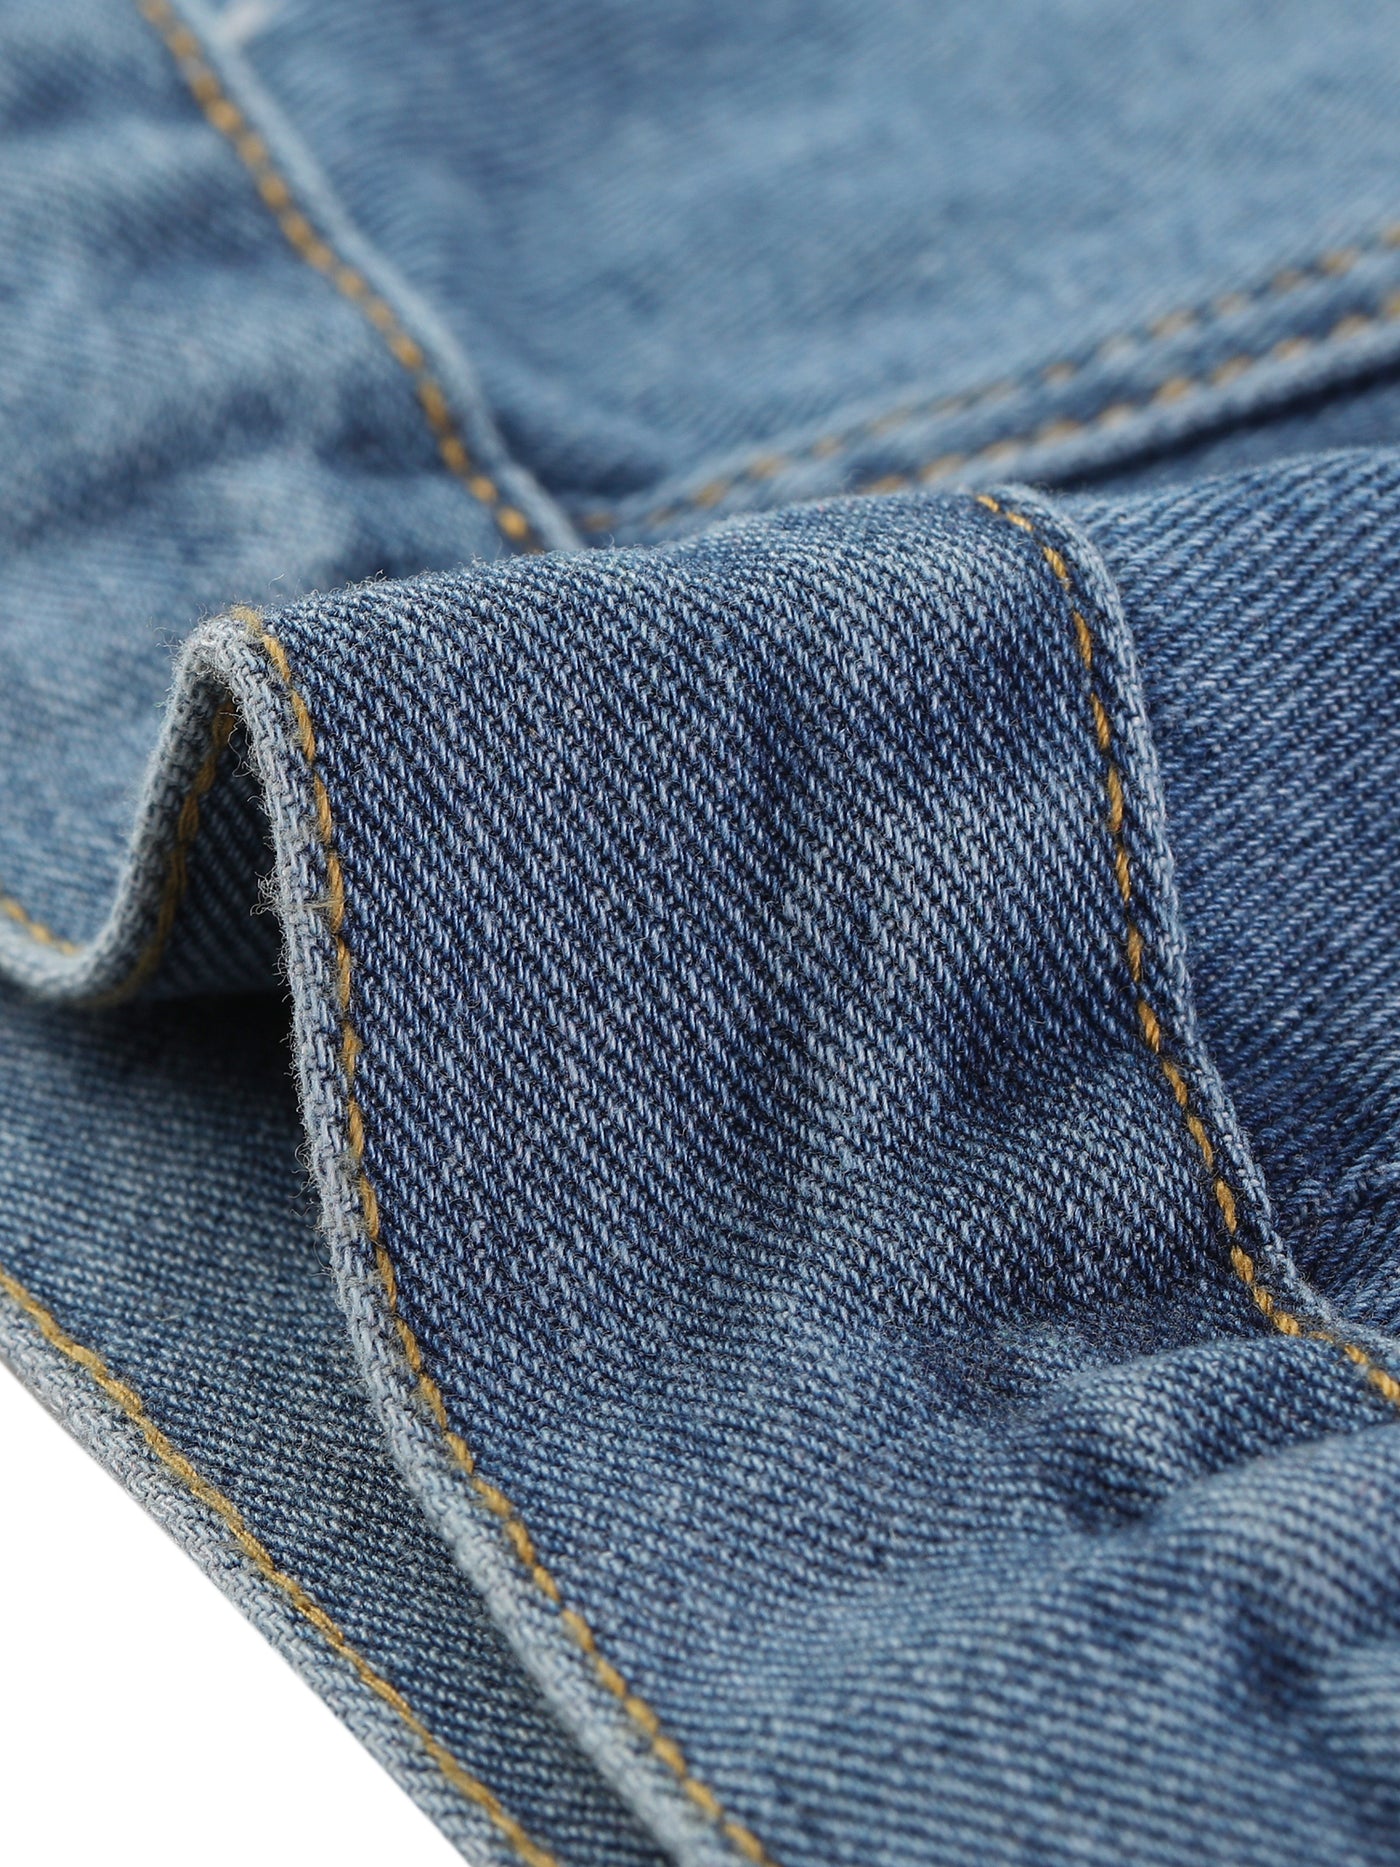 Allegra K Sleeveless Moto Jacket Zip Up Classic Jeans Denim Vest